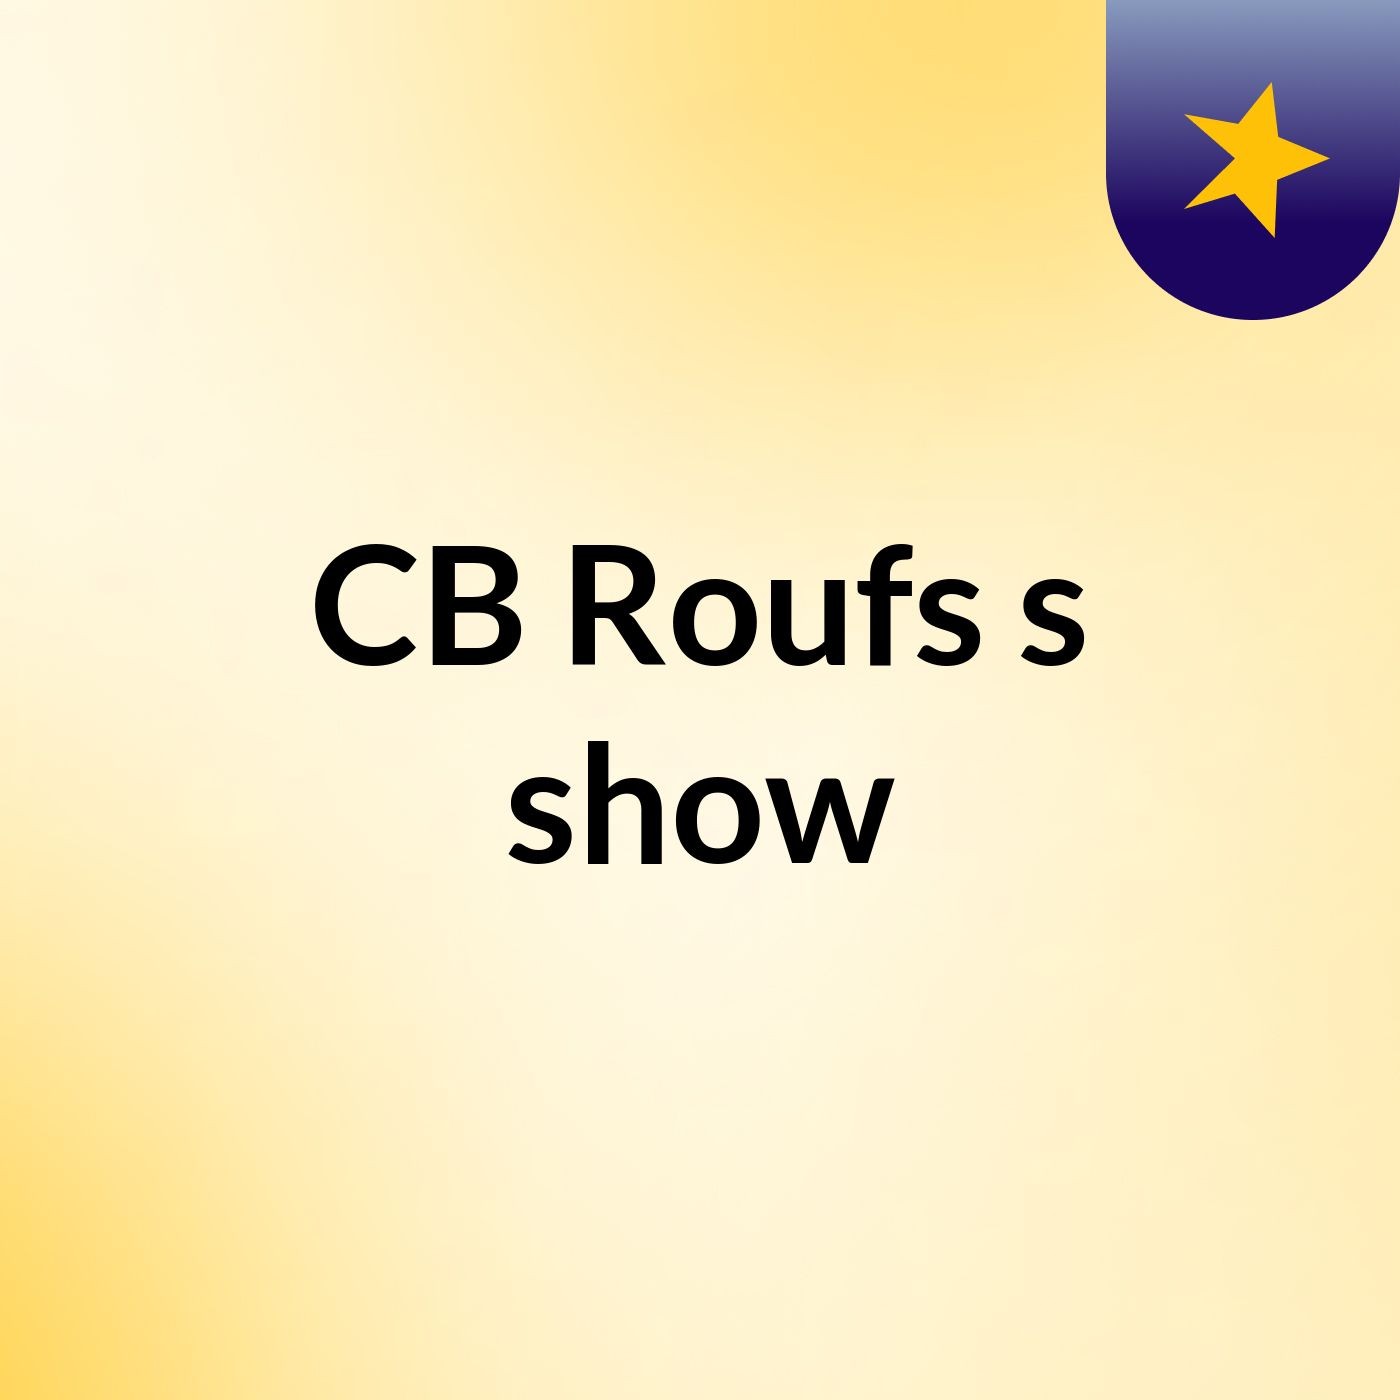 CB Roufs's show